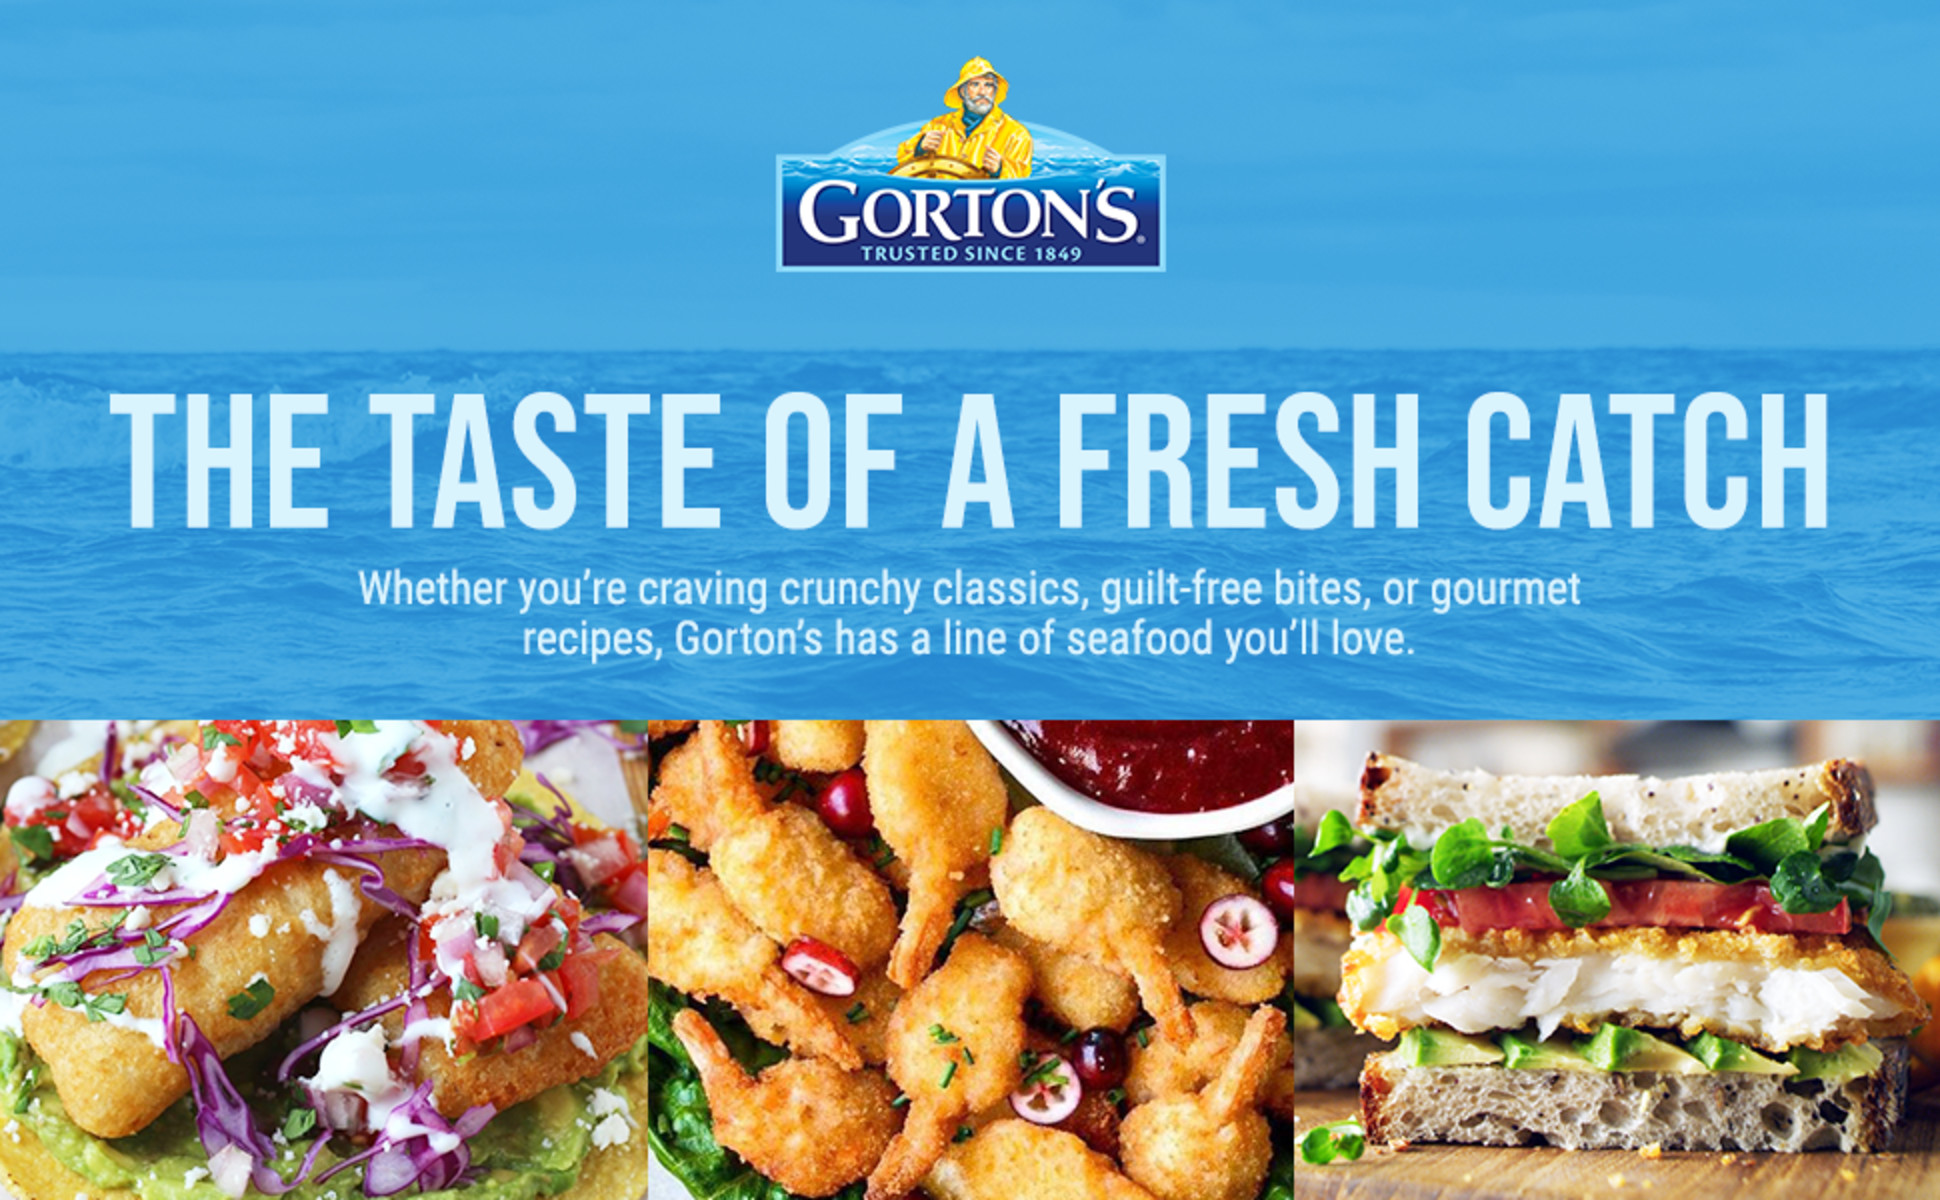 Gorton's Crunchy Breaded Fish 100% Whole Fillets, Wild Caught